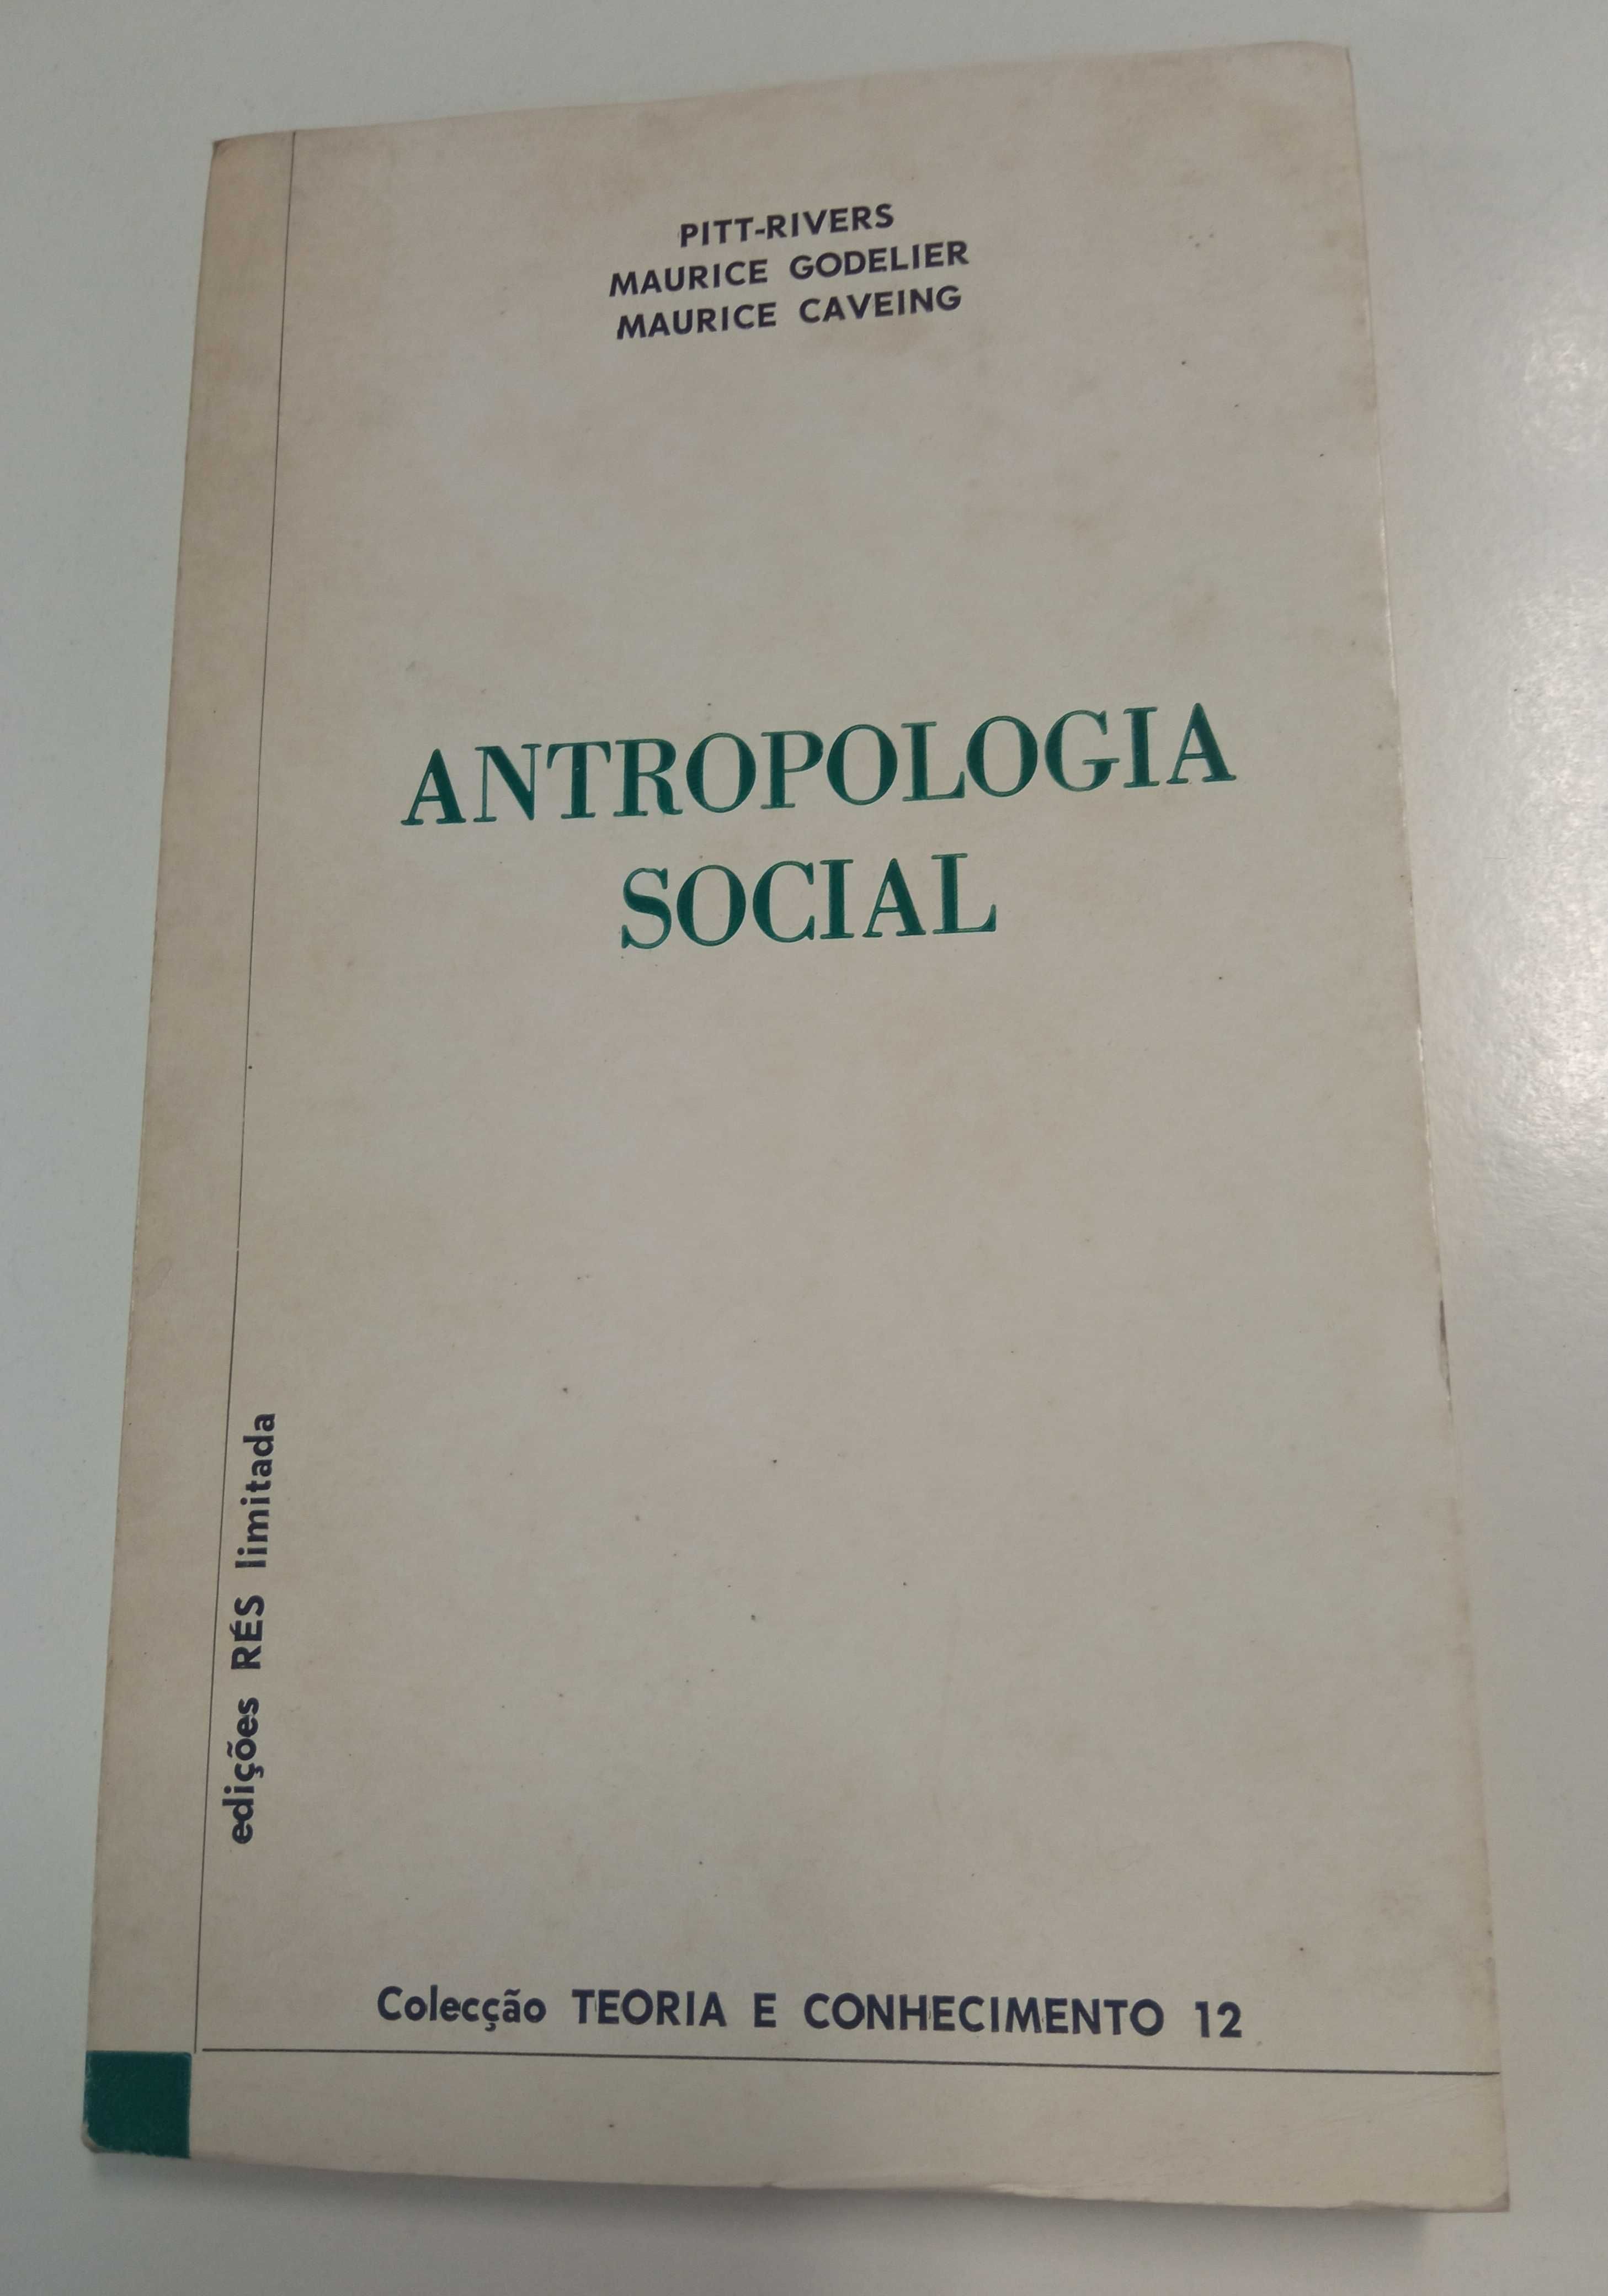 Antropologia Social, de Pitt-Rivers